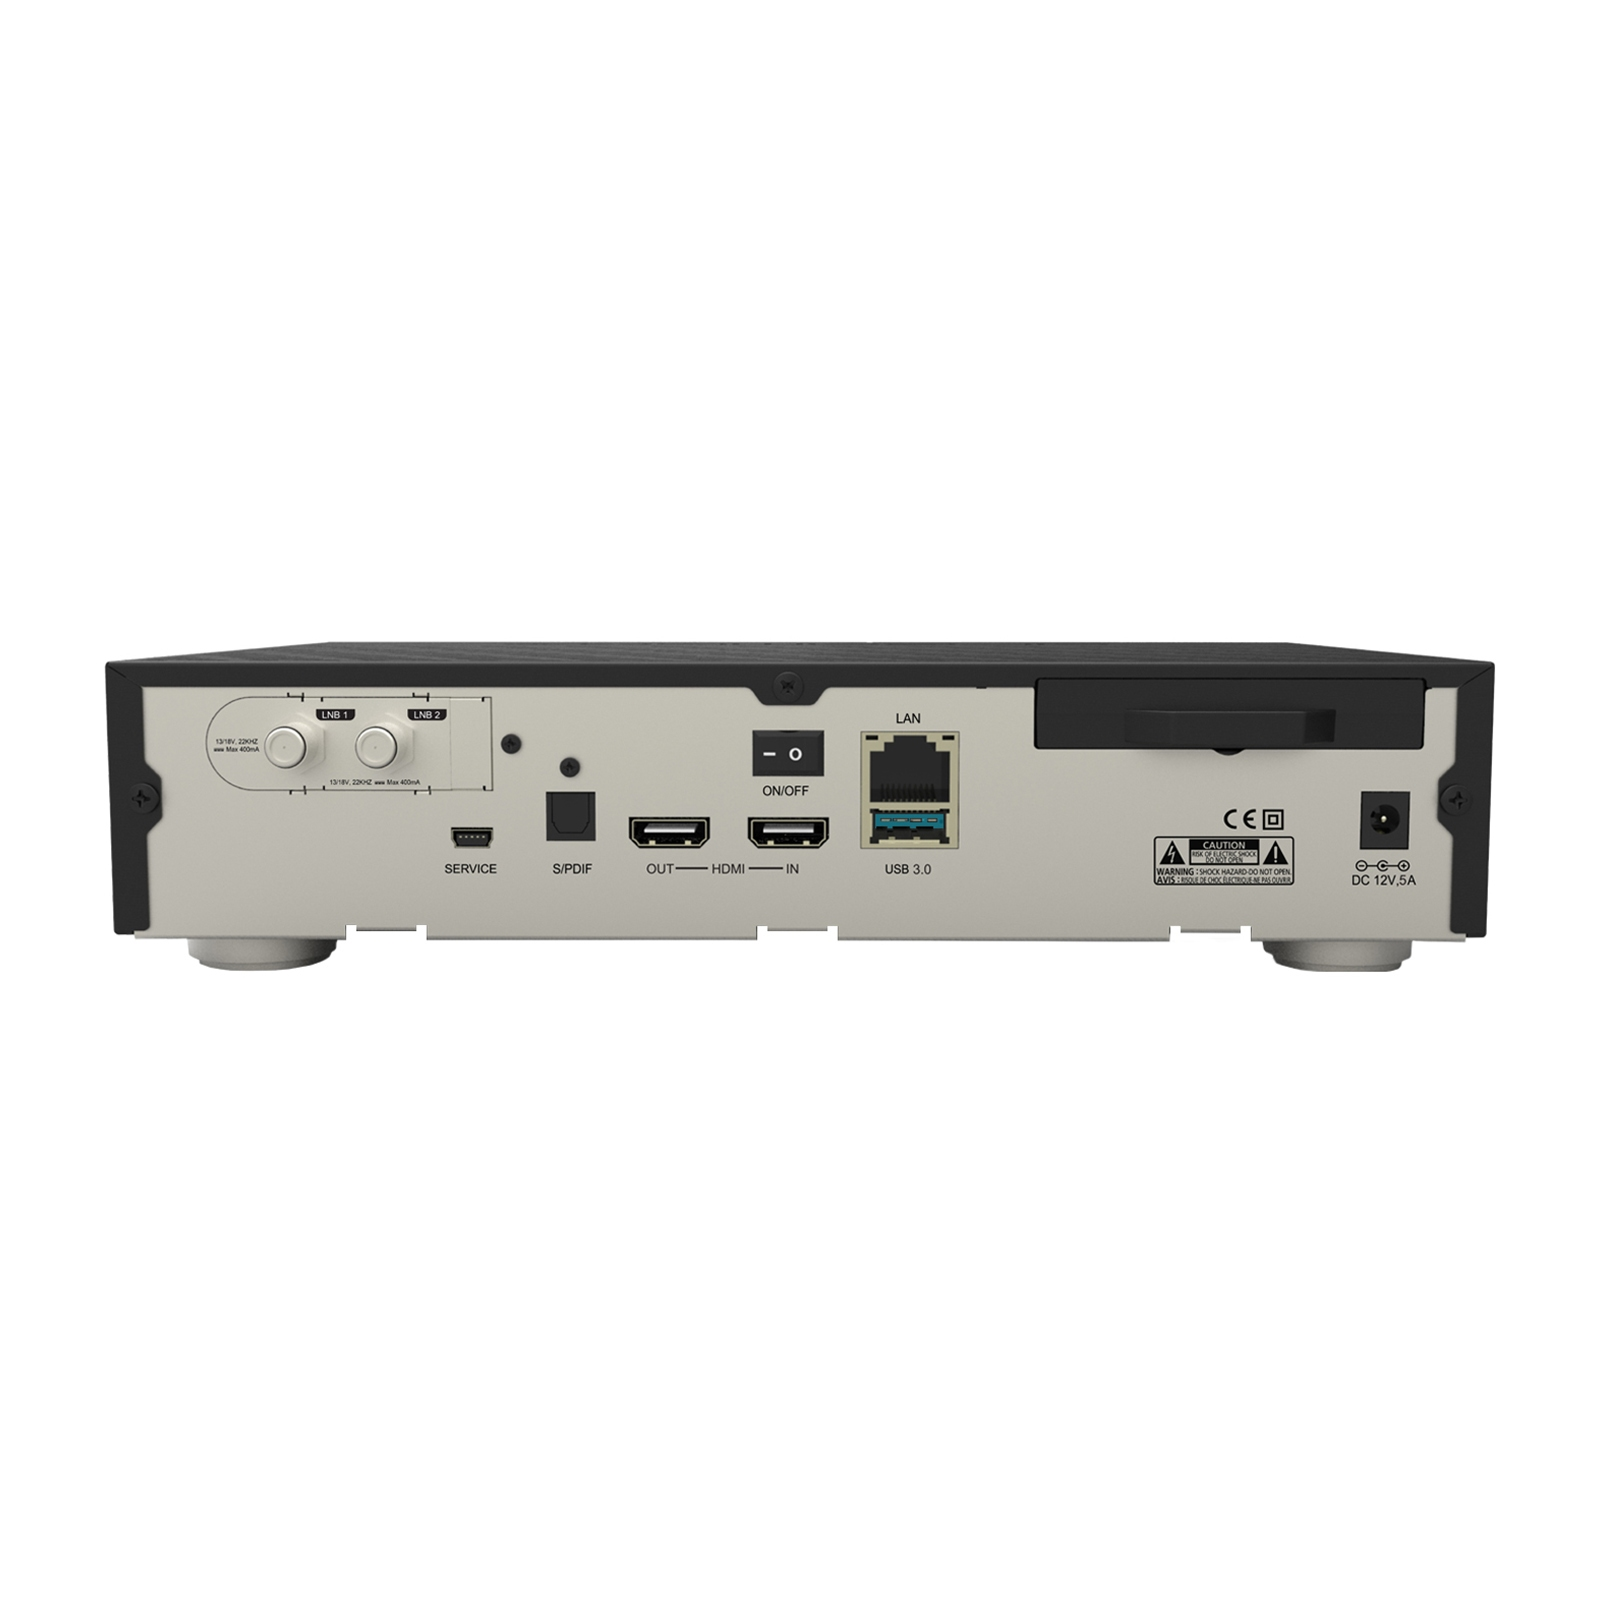 MULTIMEDIA DM900 DREAM Schwarz) Sat-Receiver MS Twin 1xDVB-S2X 500GB Tuner, (PVR-Funktion, RC20